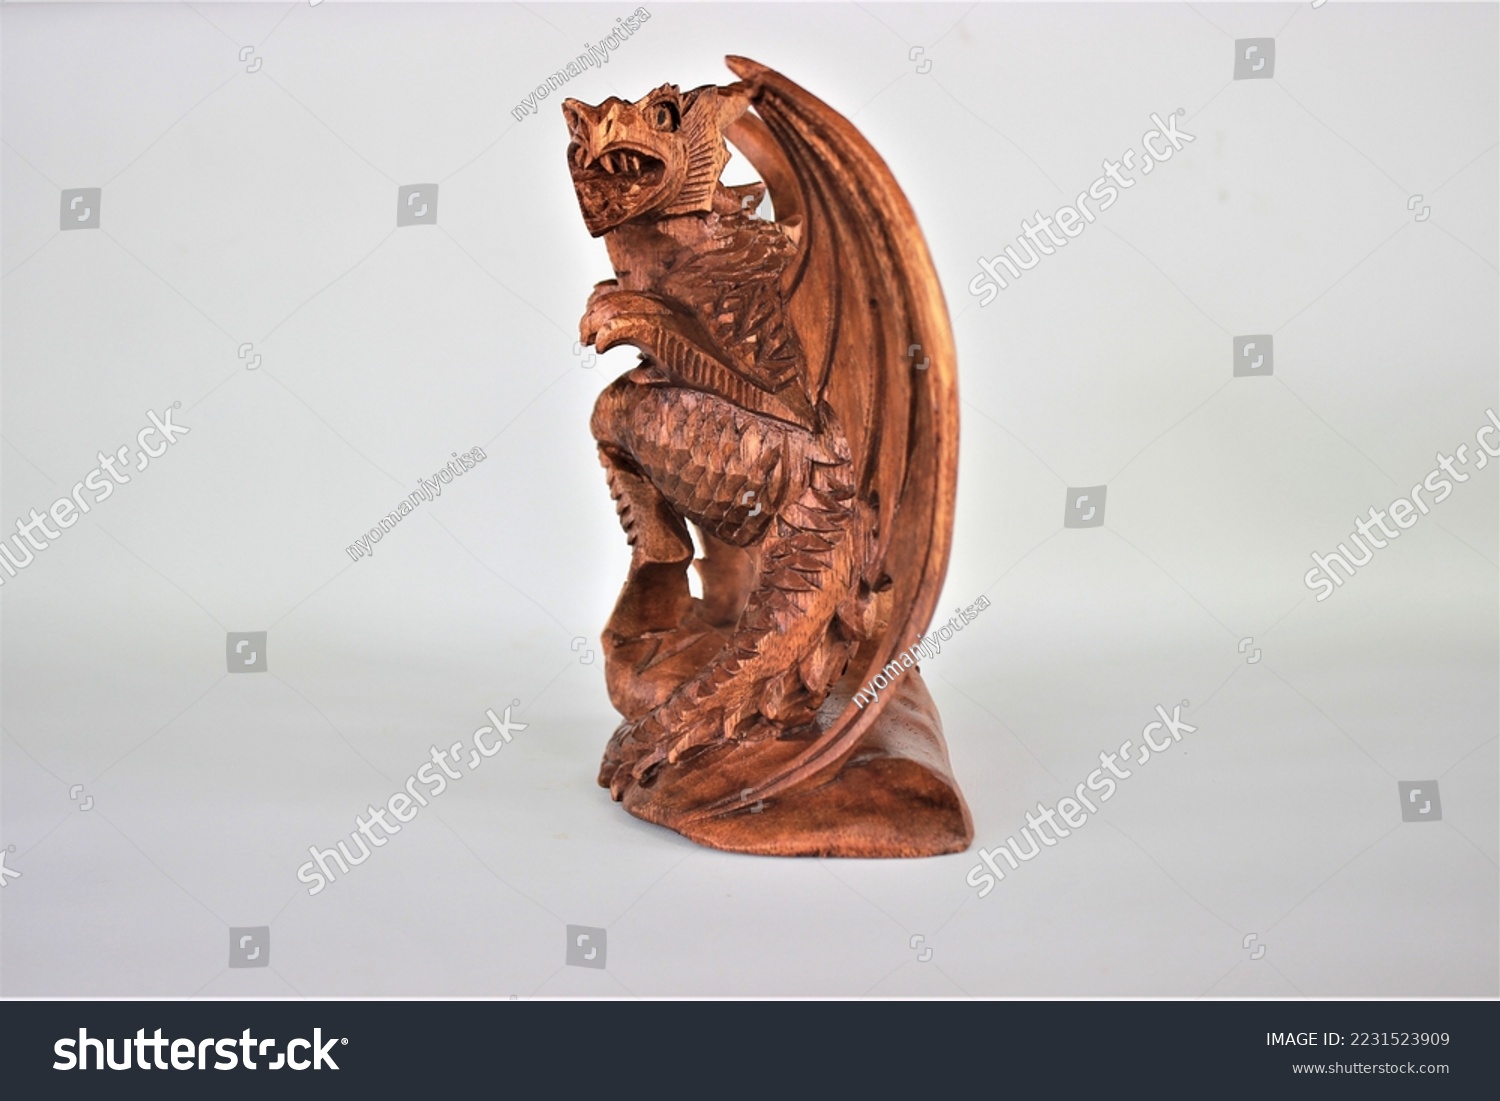 	
Wooden Dragon Sculpture Handmade Bali Wood Carving, Sculpture, Art from Bali Indonesia #2231523909